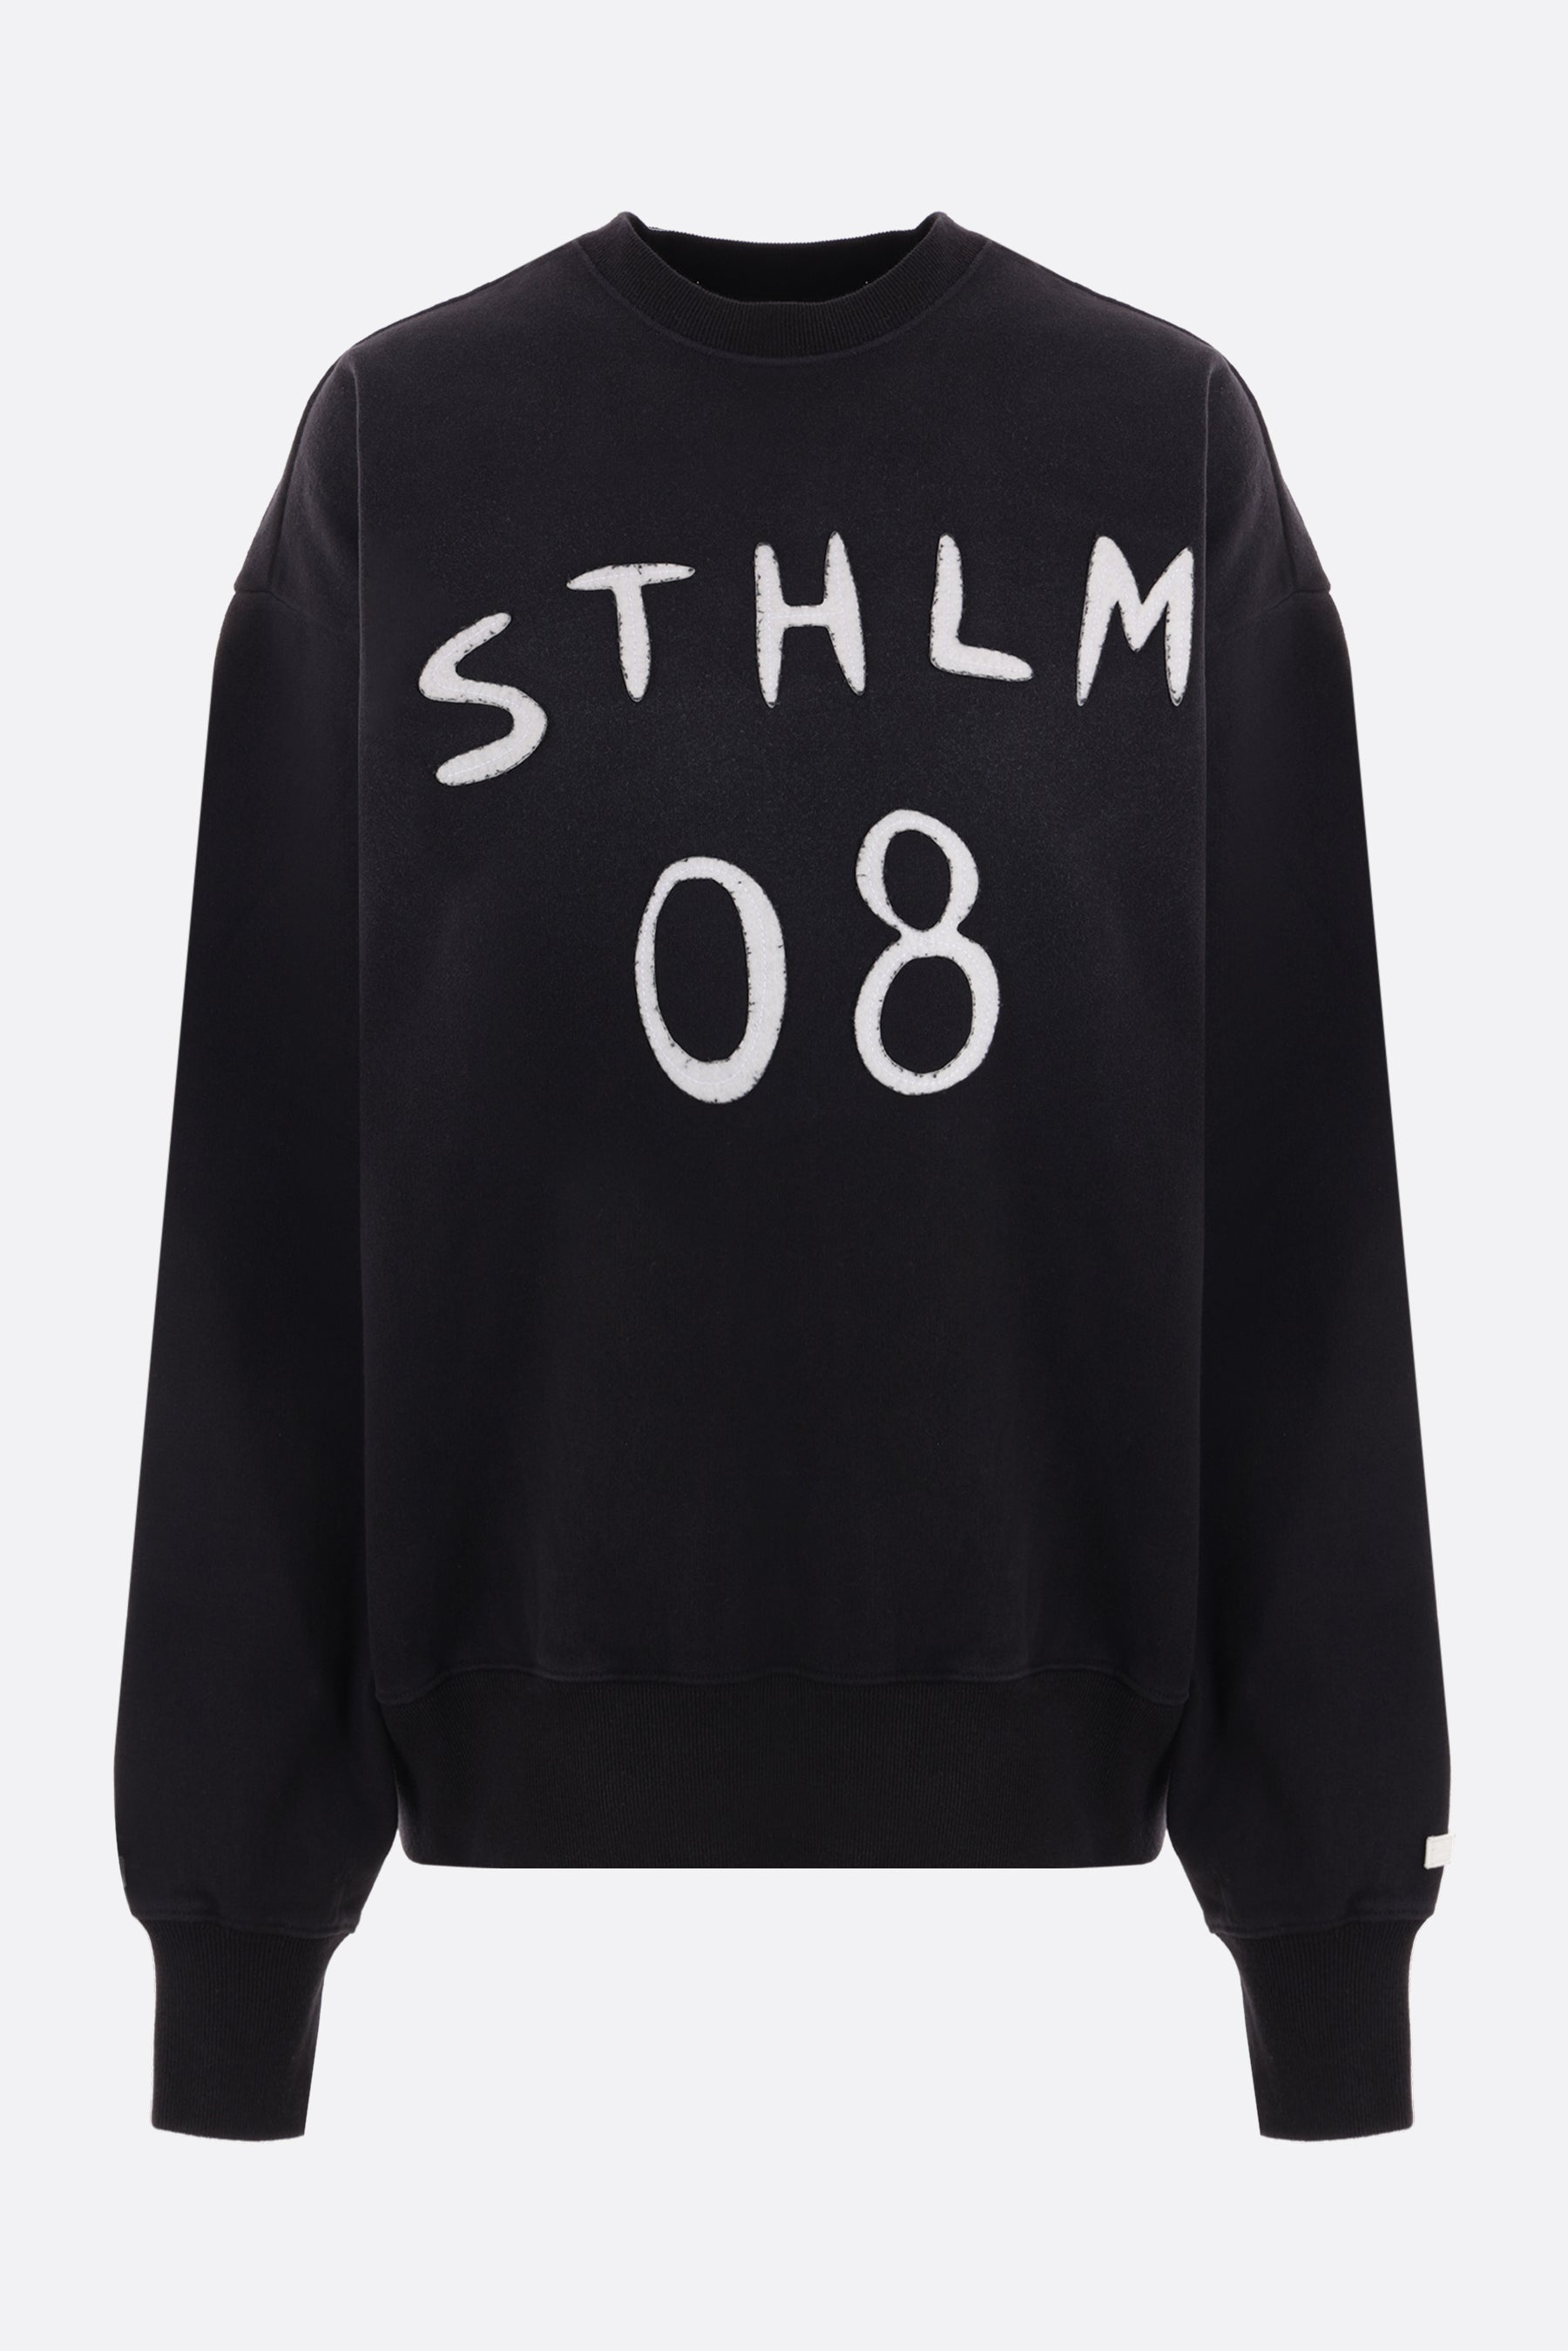 STHLM 08 patch cotton fleece sweatshirt